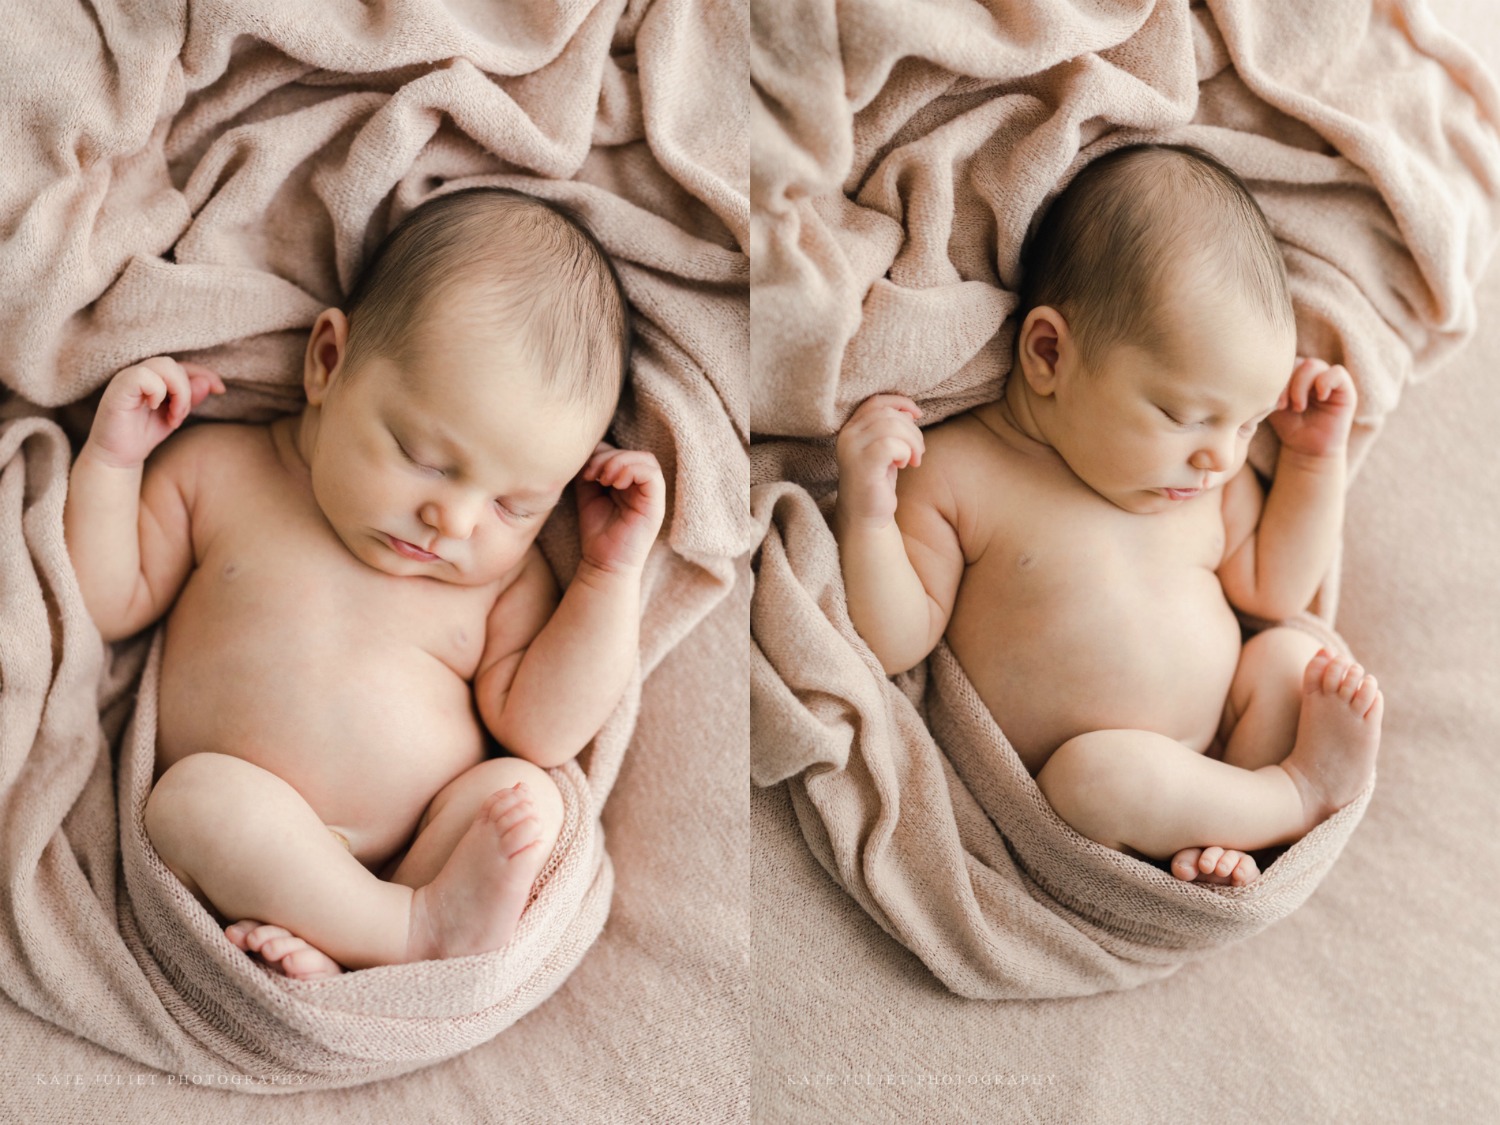 Fairfax VA Newborn Photographer | Kate Juliet Photography